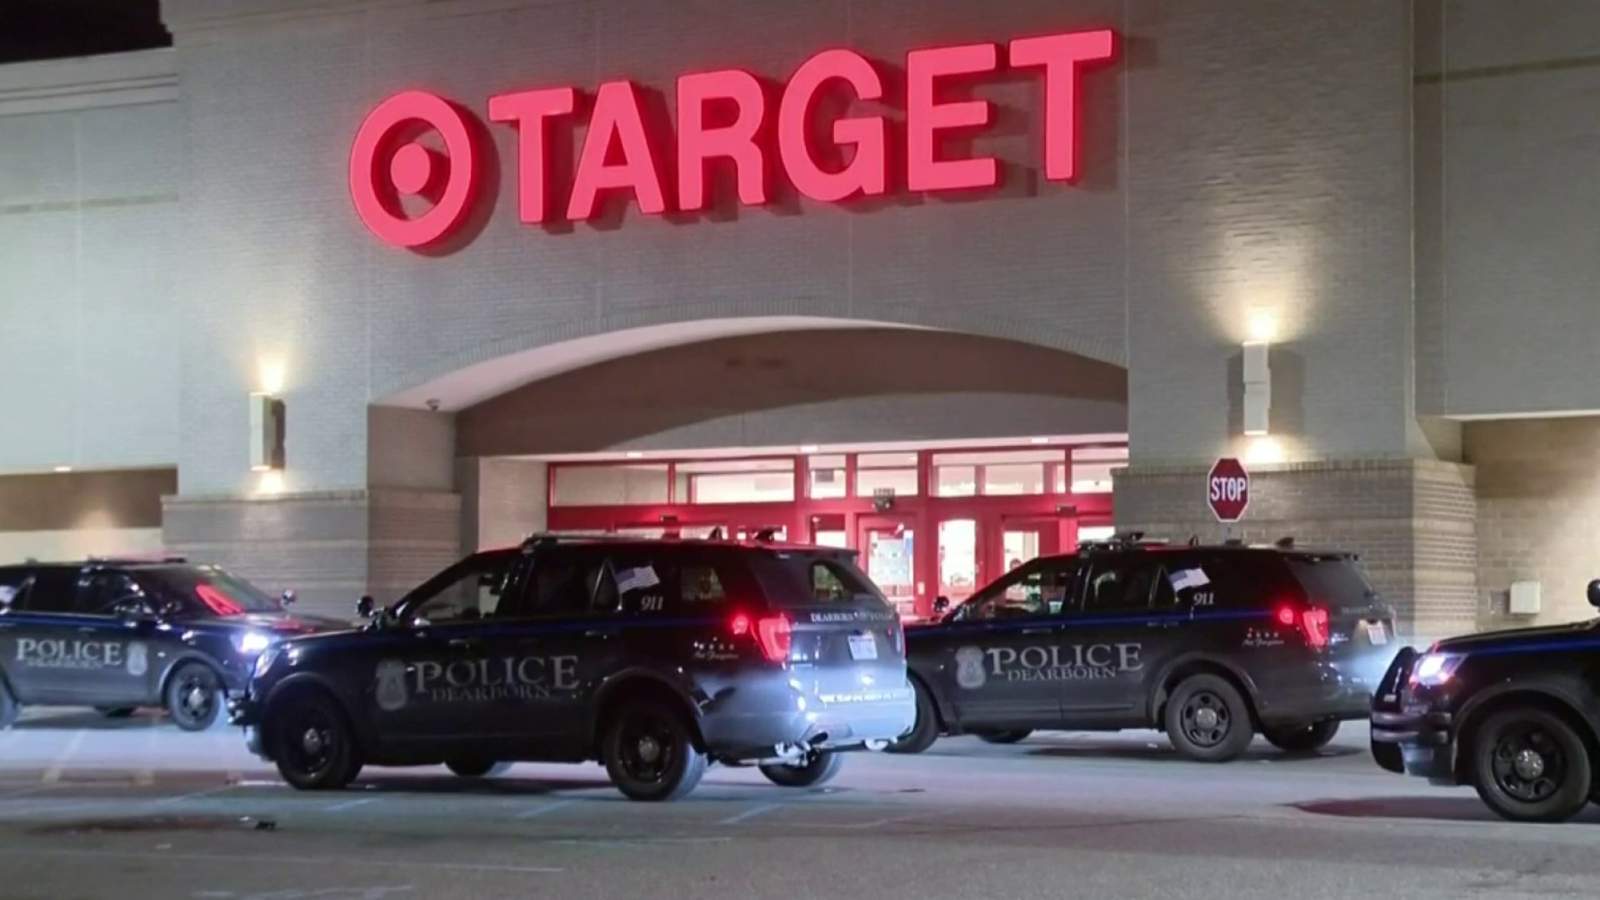 3 Target stores in Wayne County broken into overnight